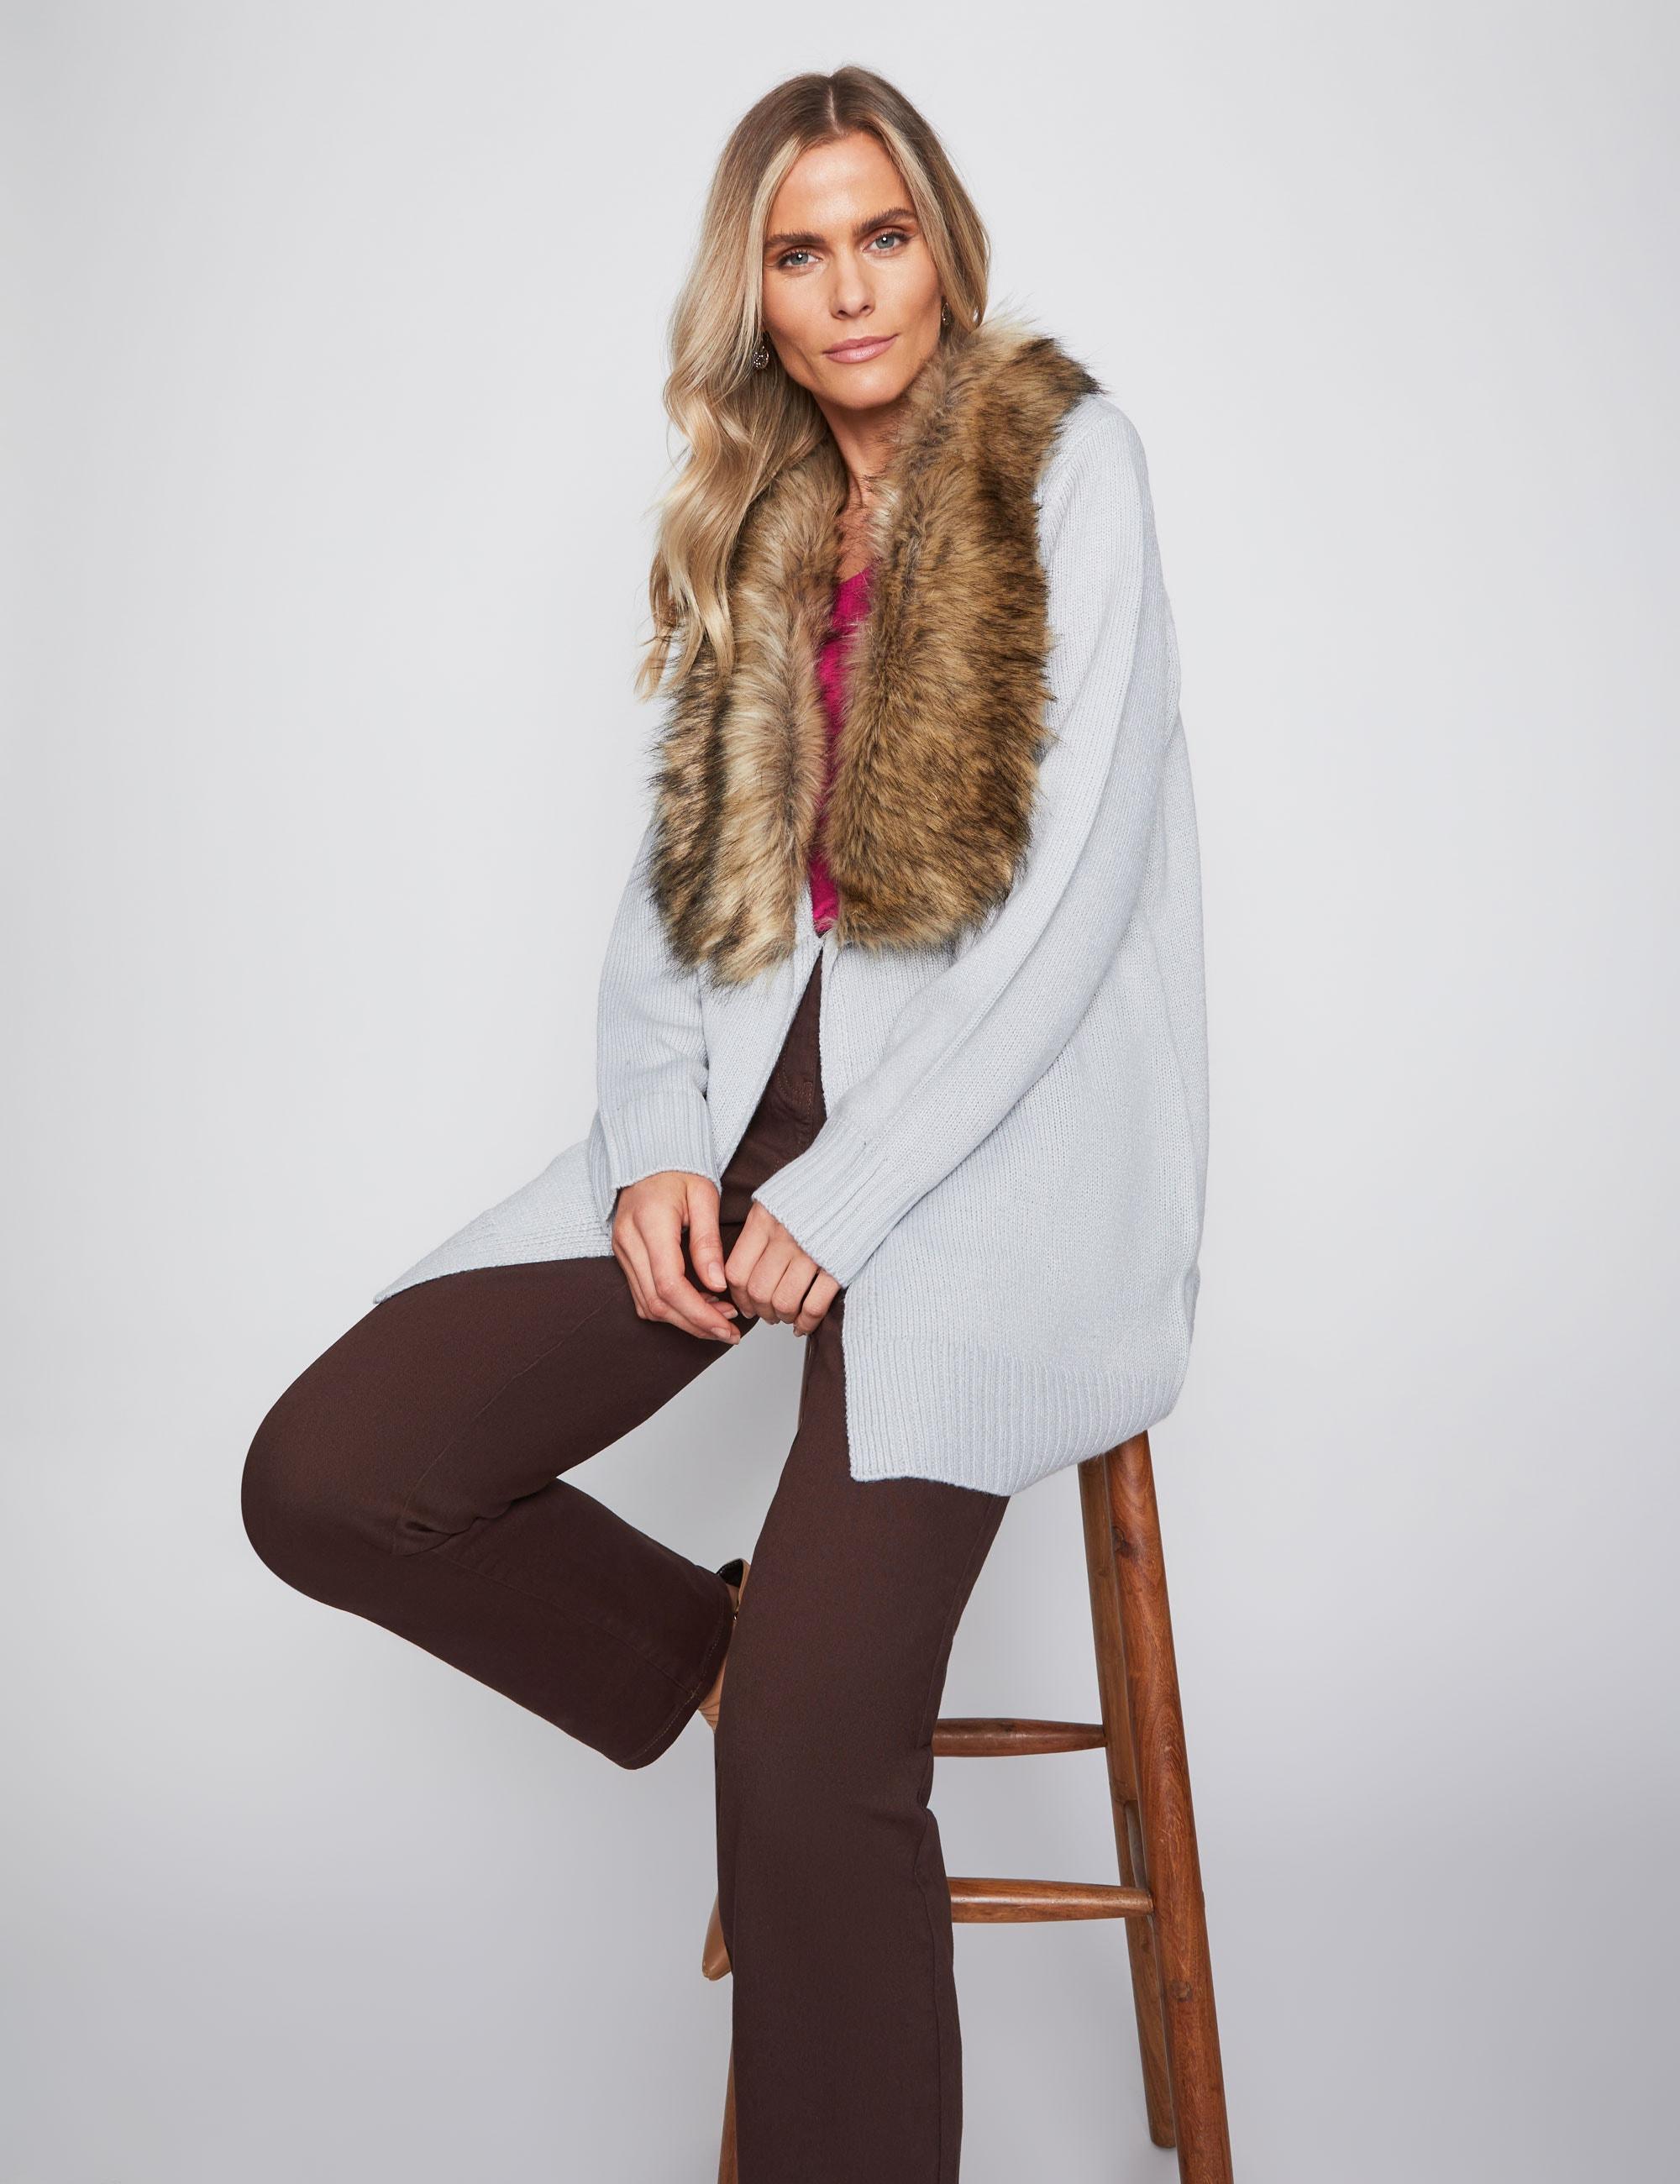 MILLERS - Womens Long Coat - Grey Winter Coatigan - Faux Fur Collar - Casual - Long Sleeve - Cardigan - Warm Comfy Fashion - Work Wear Office Clothing